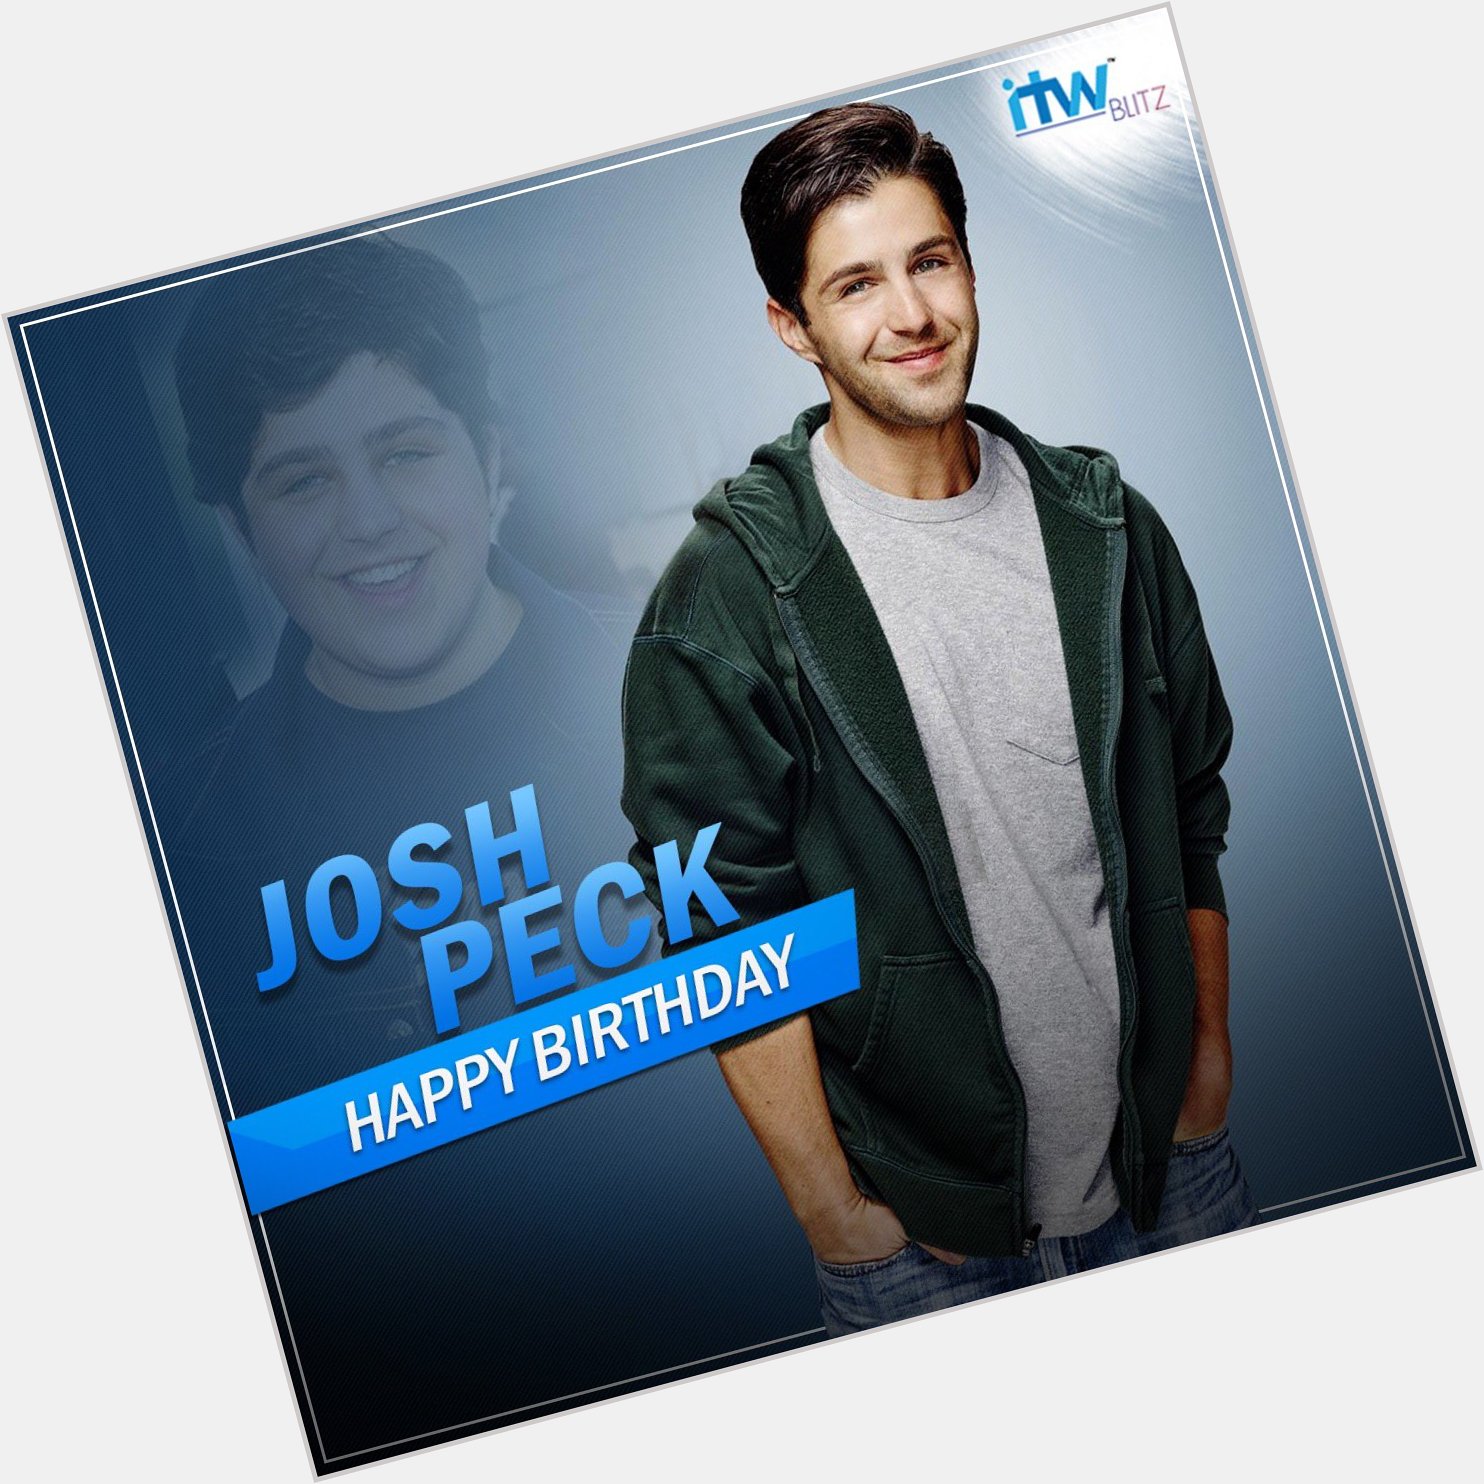 Wishing the Drake and Josh actor Josh Peck a very happy birthday!   